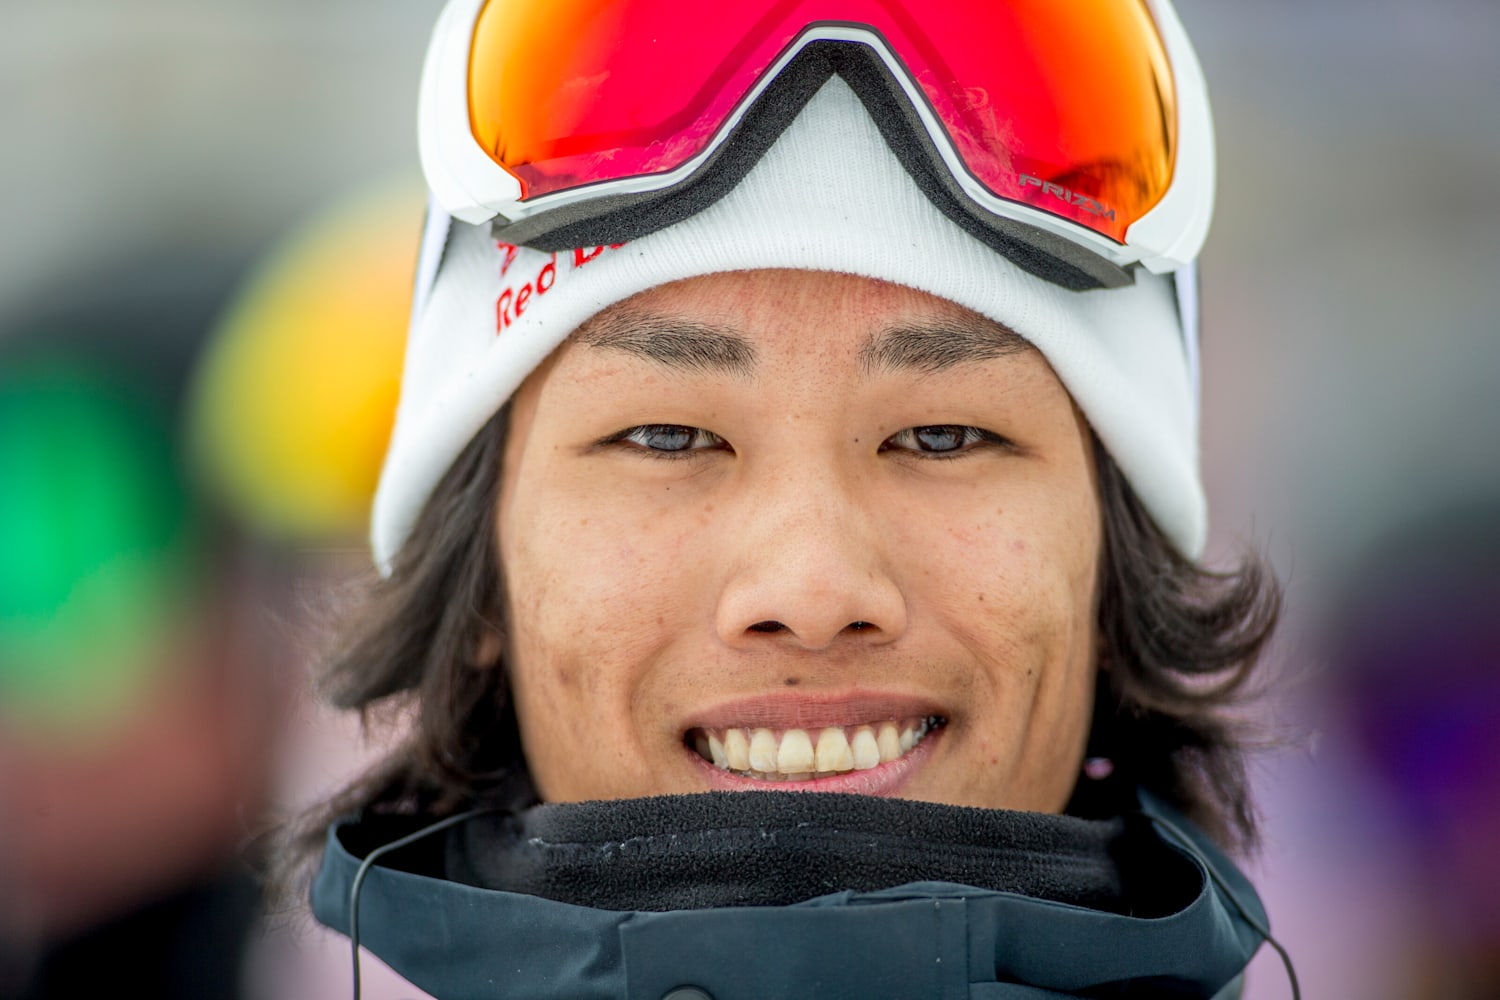 Yuki Kadono Snowboarding Red Bull Athlete Profile